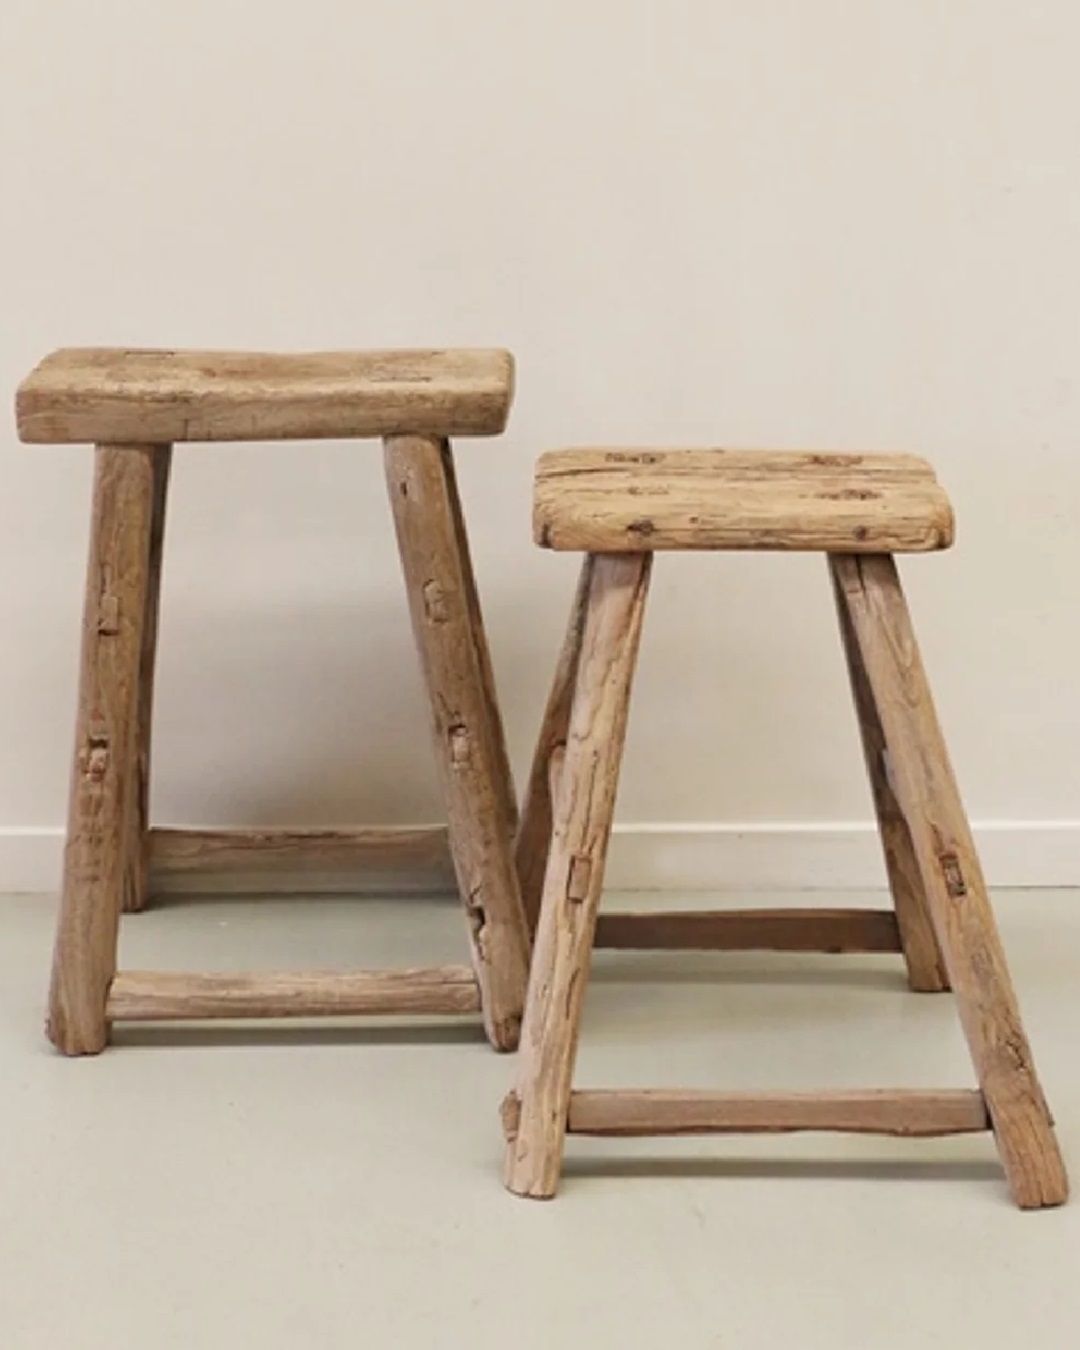 Antique wooden stools